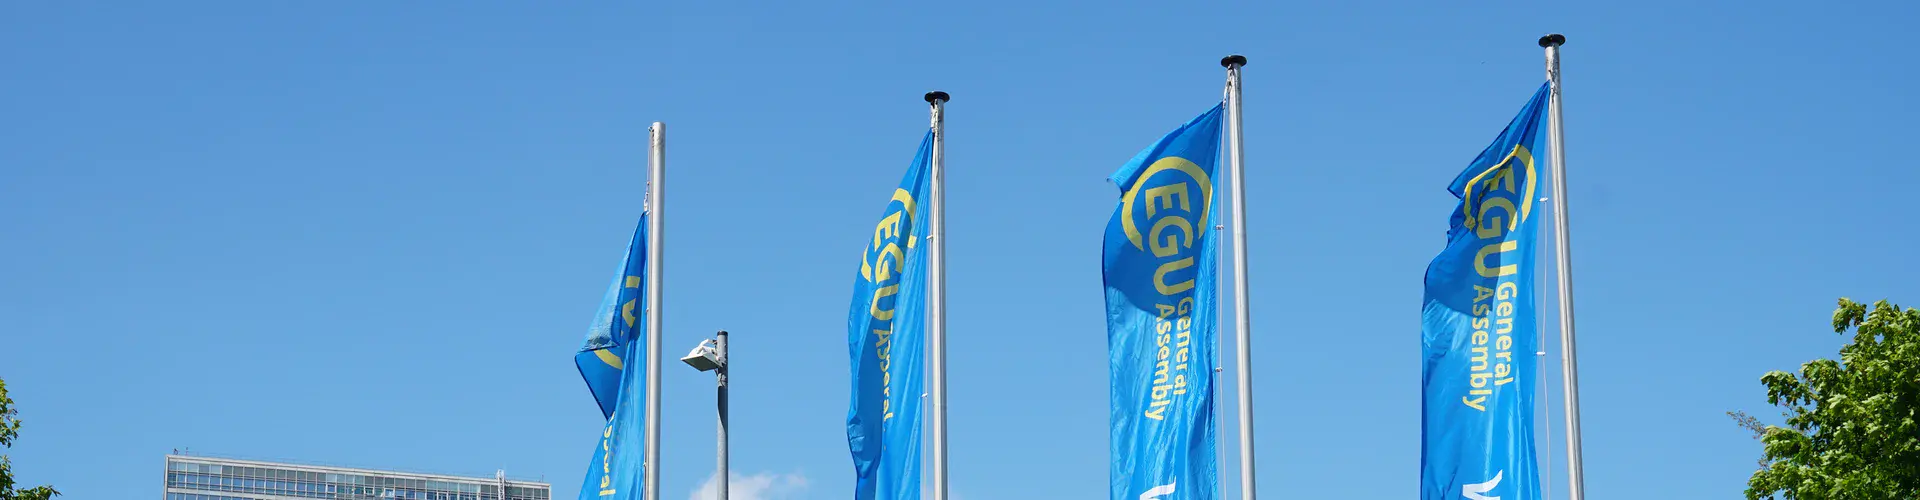 EGU flags (Credit: EGU/Foto Pfluegl)